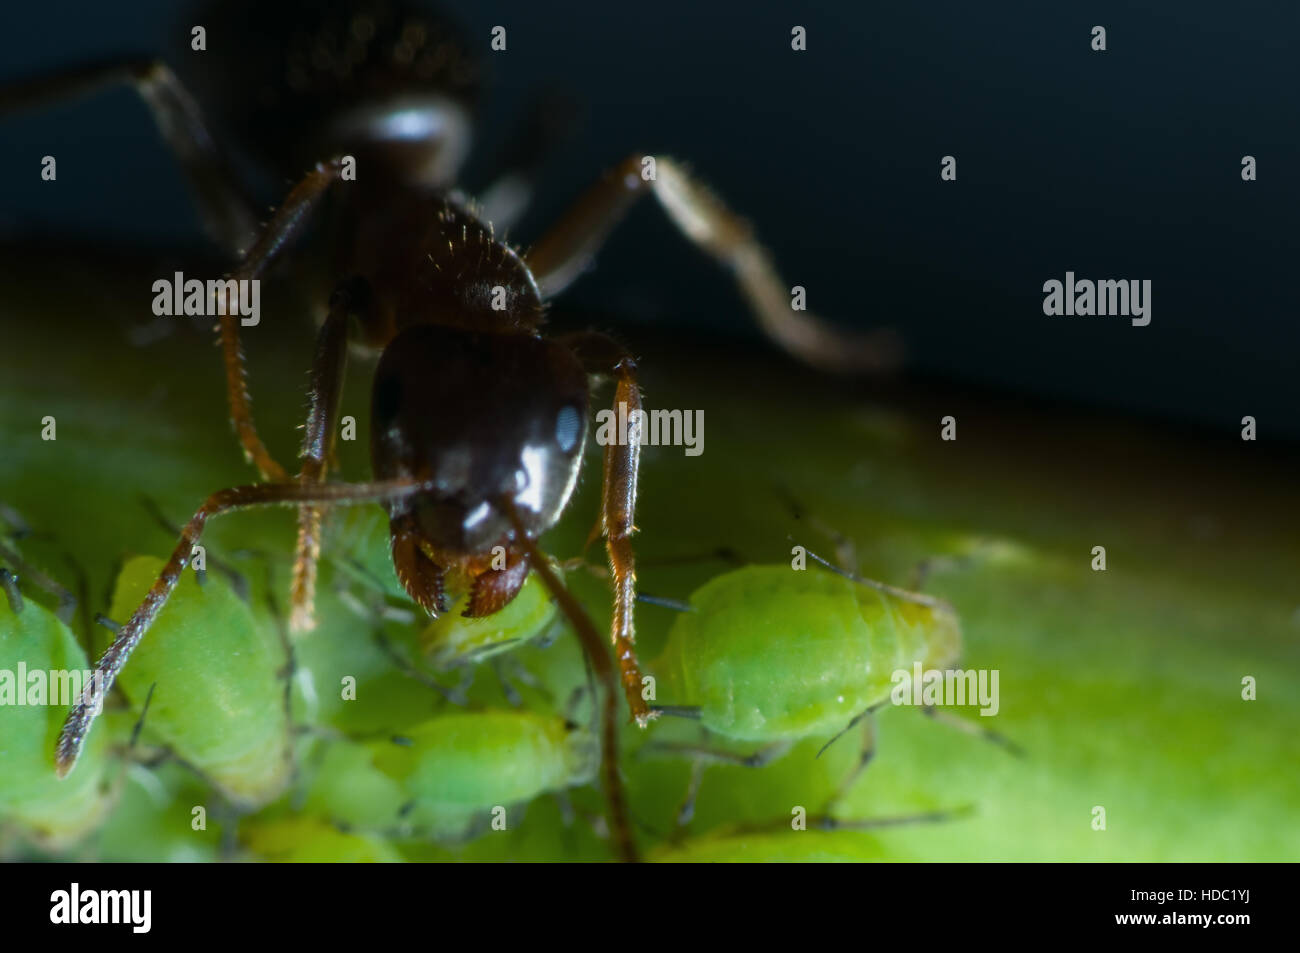 Makro-Ansicht einer Ameise (Ant) mit grünen Blattläuse (Aphidoidea). Stockfoto